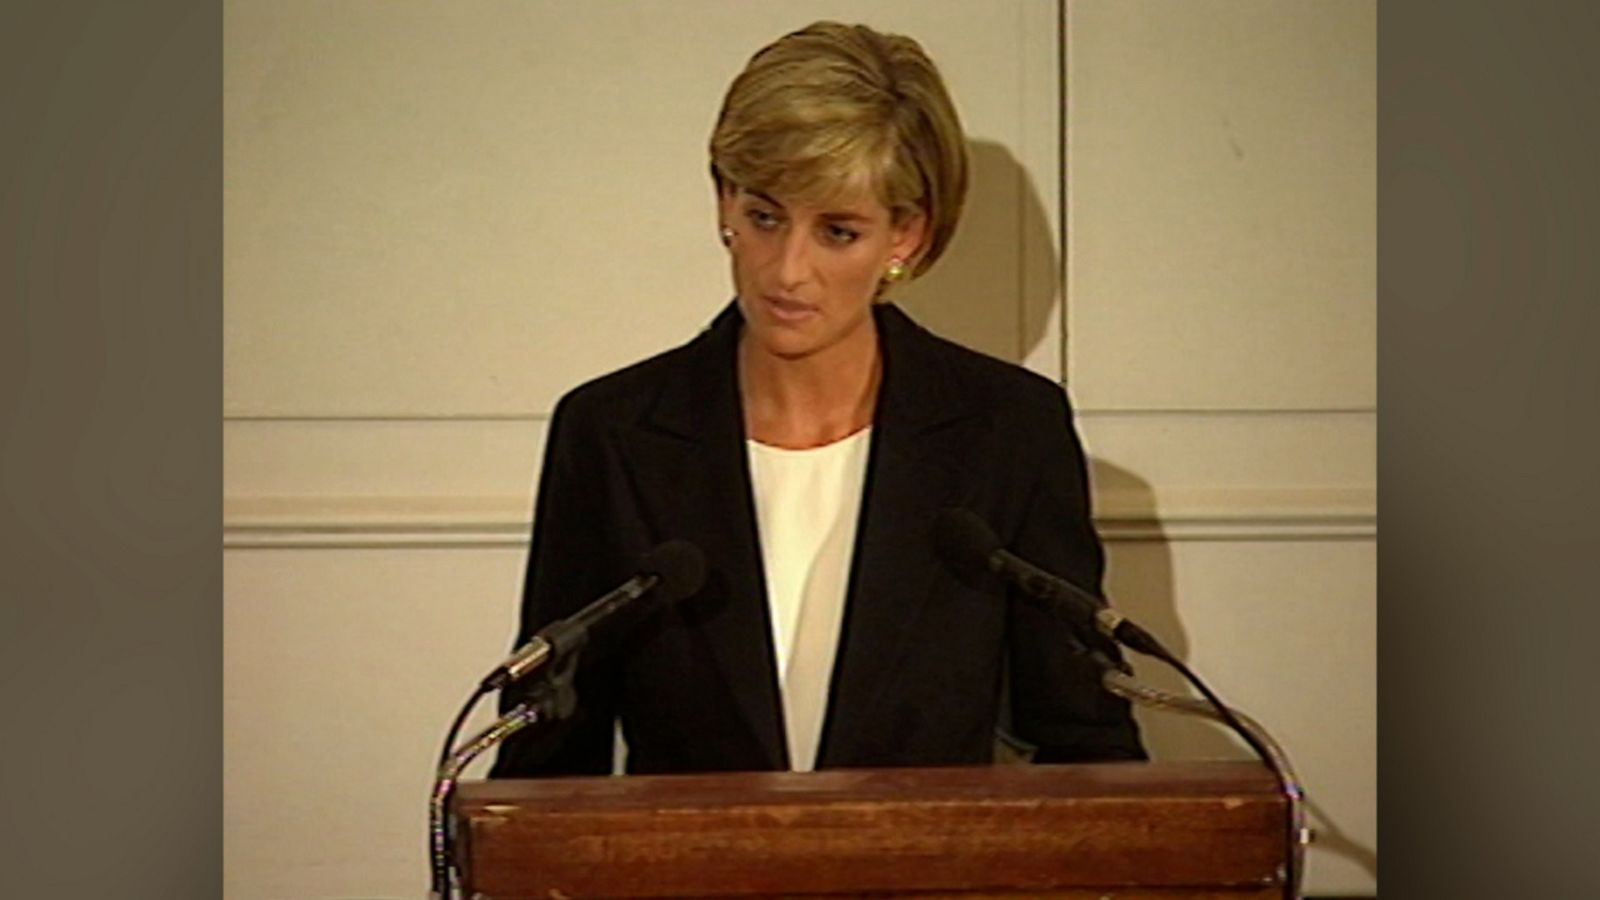 A Look At Princess Dianas Memorable Humanitarian Speeches Through The